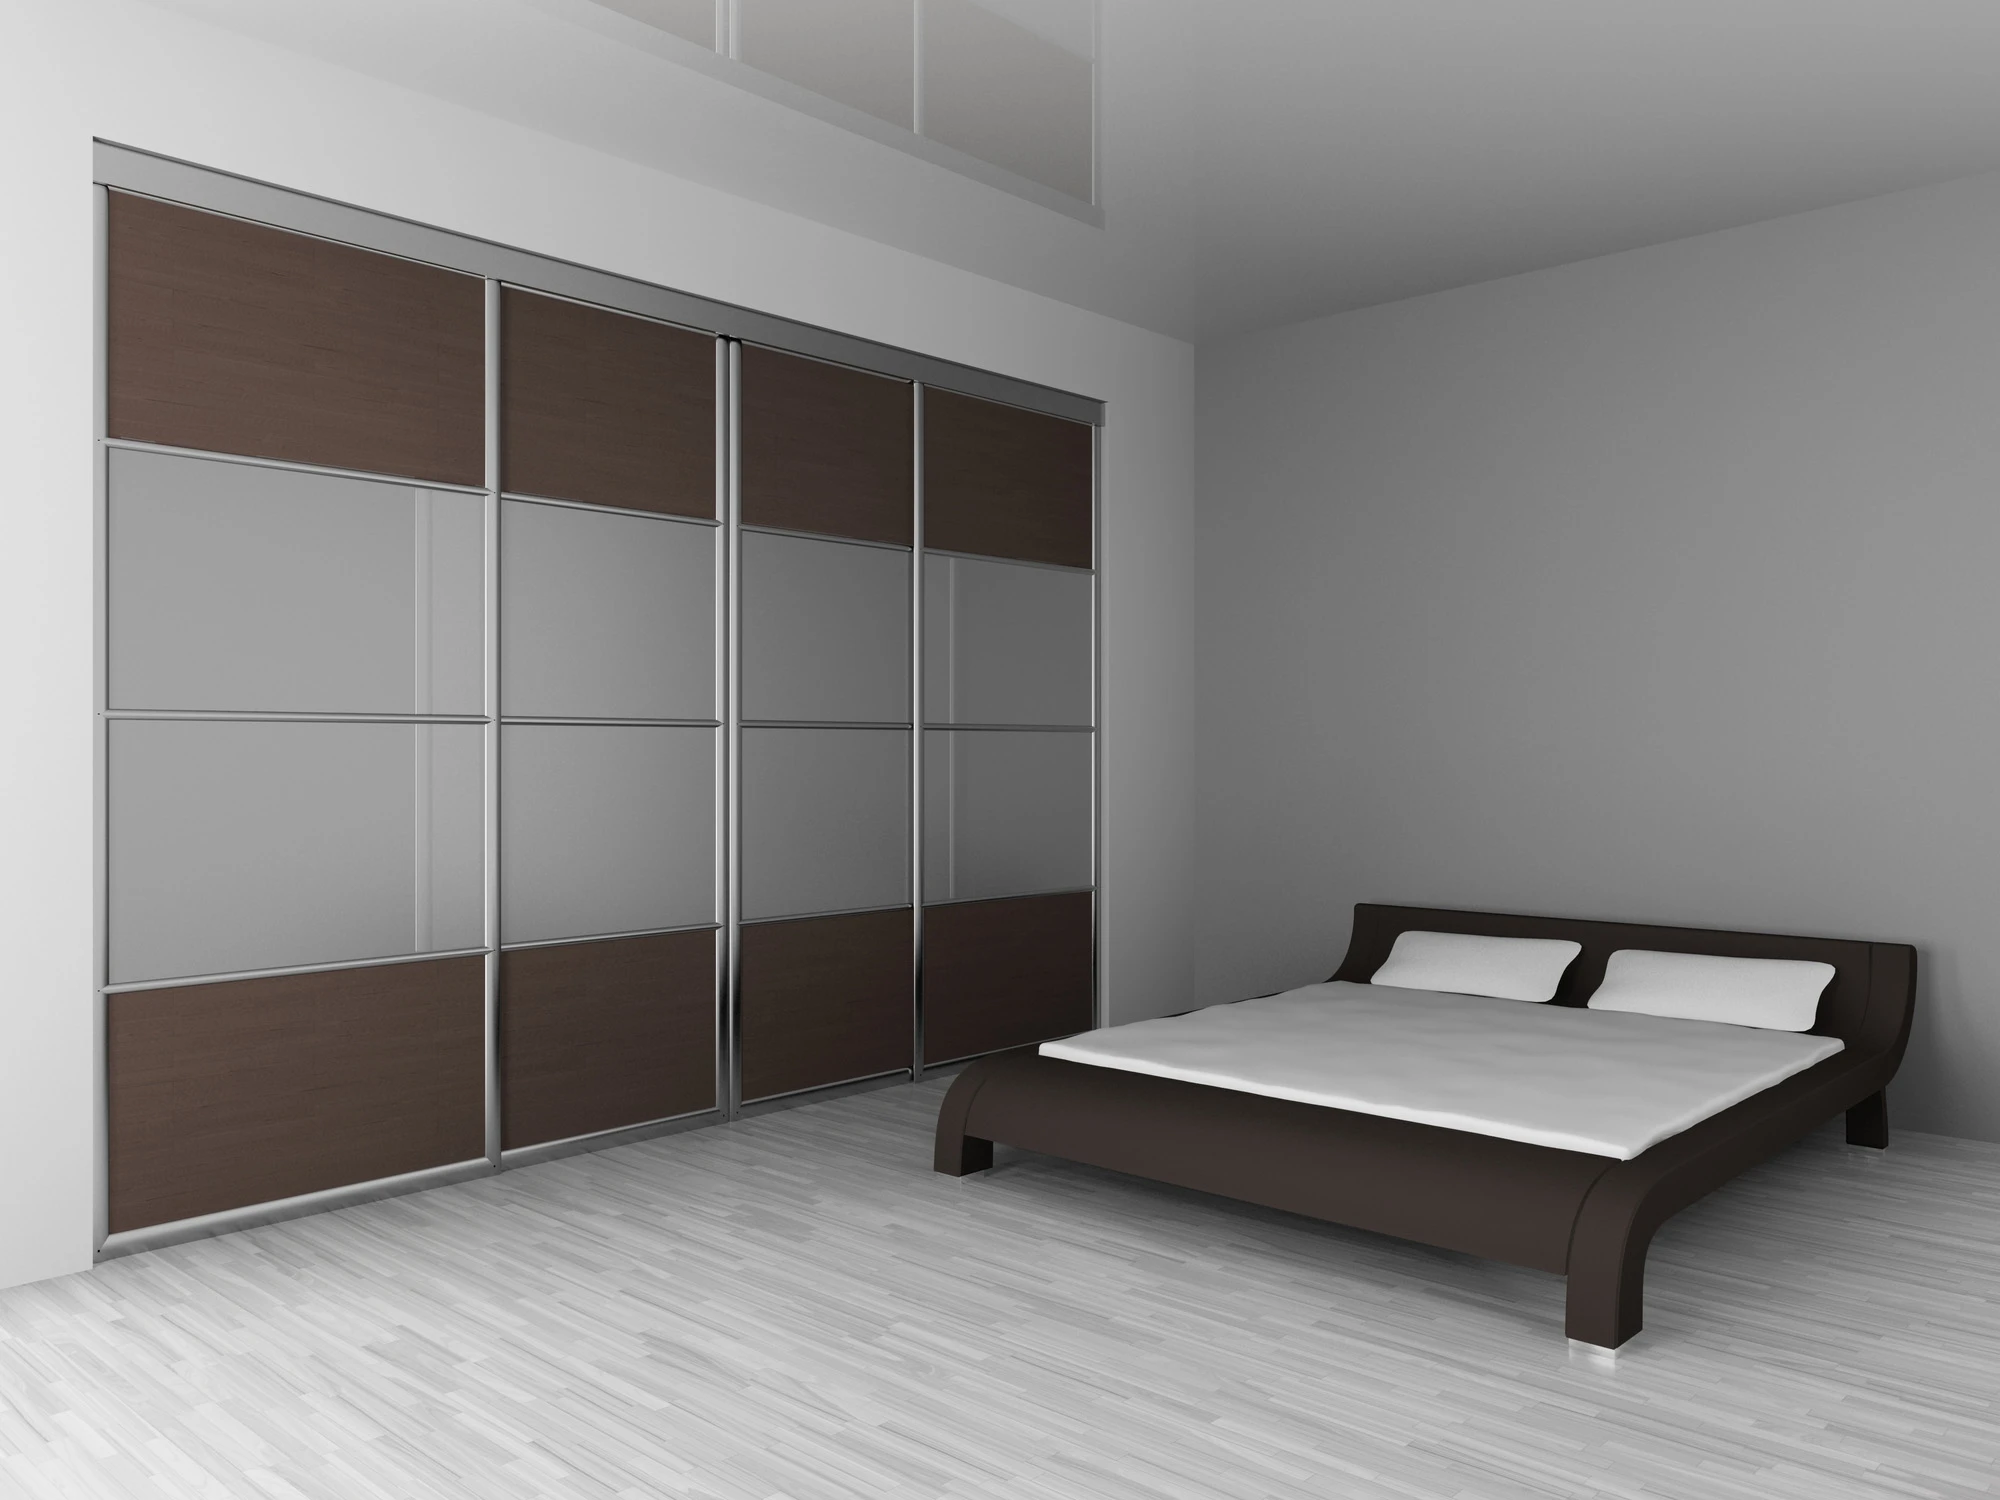 Custom wooden bedroom wardrobe closet modern design 2021 with three sliding doors